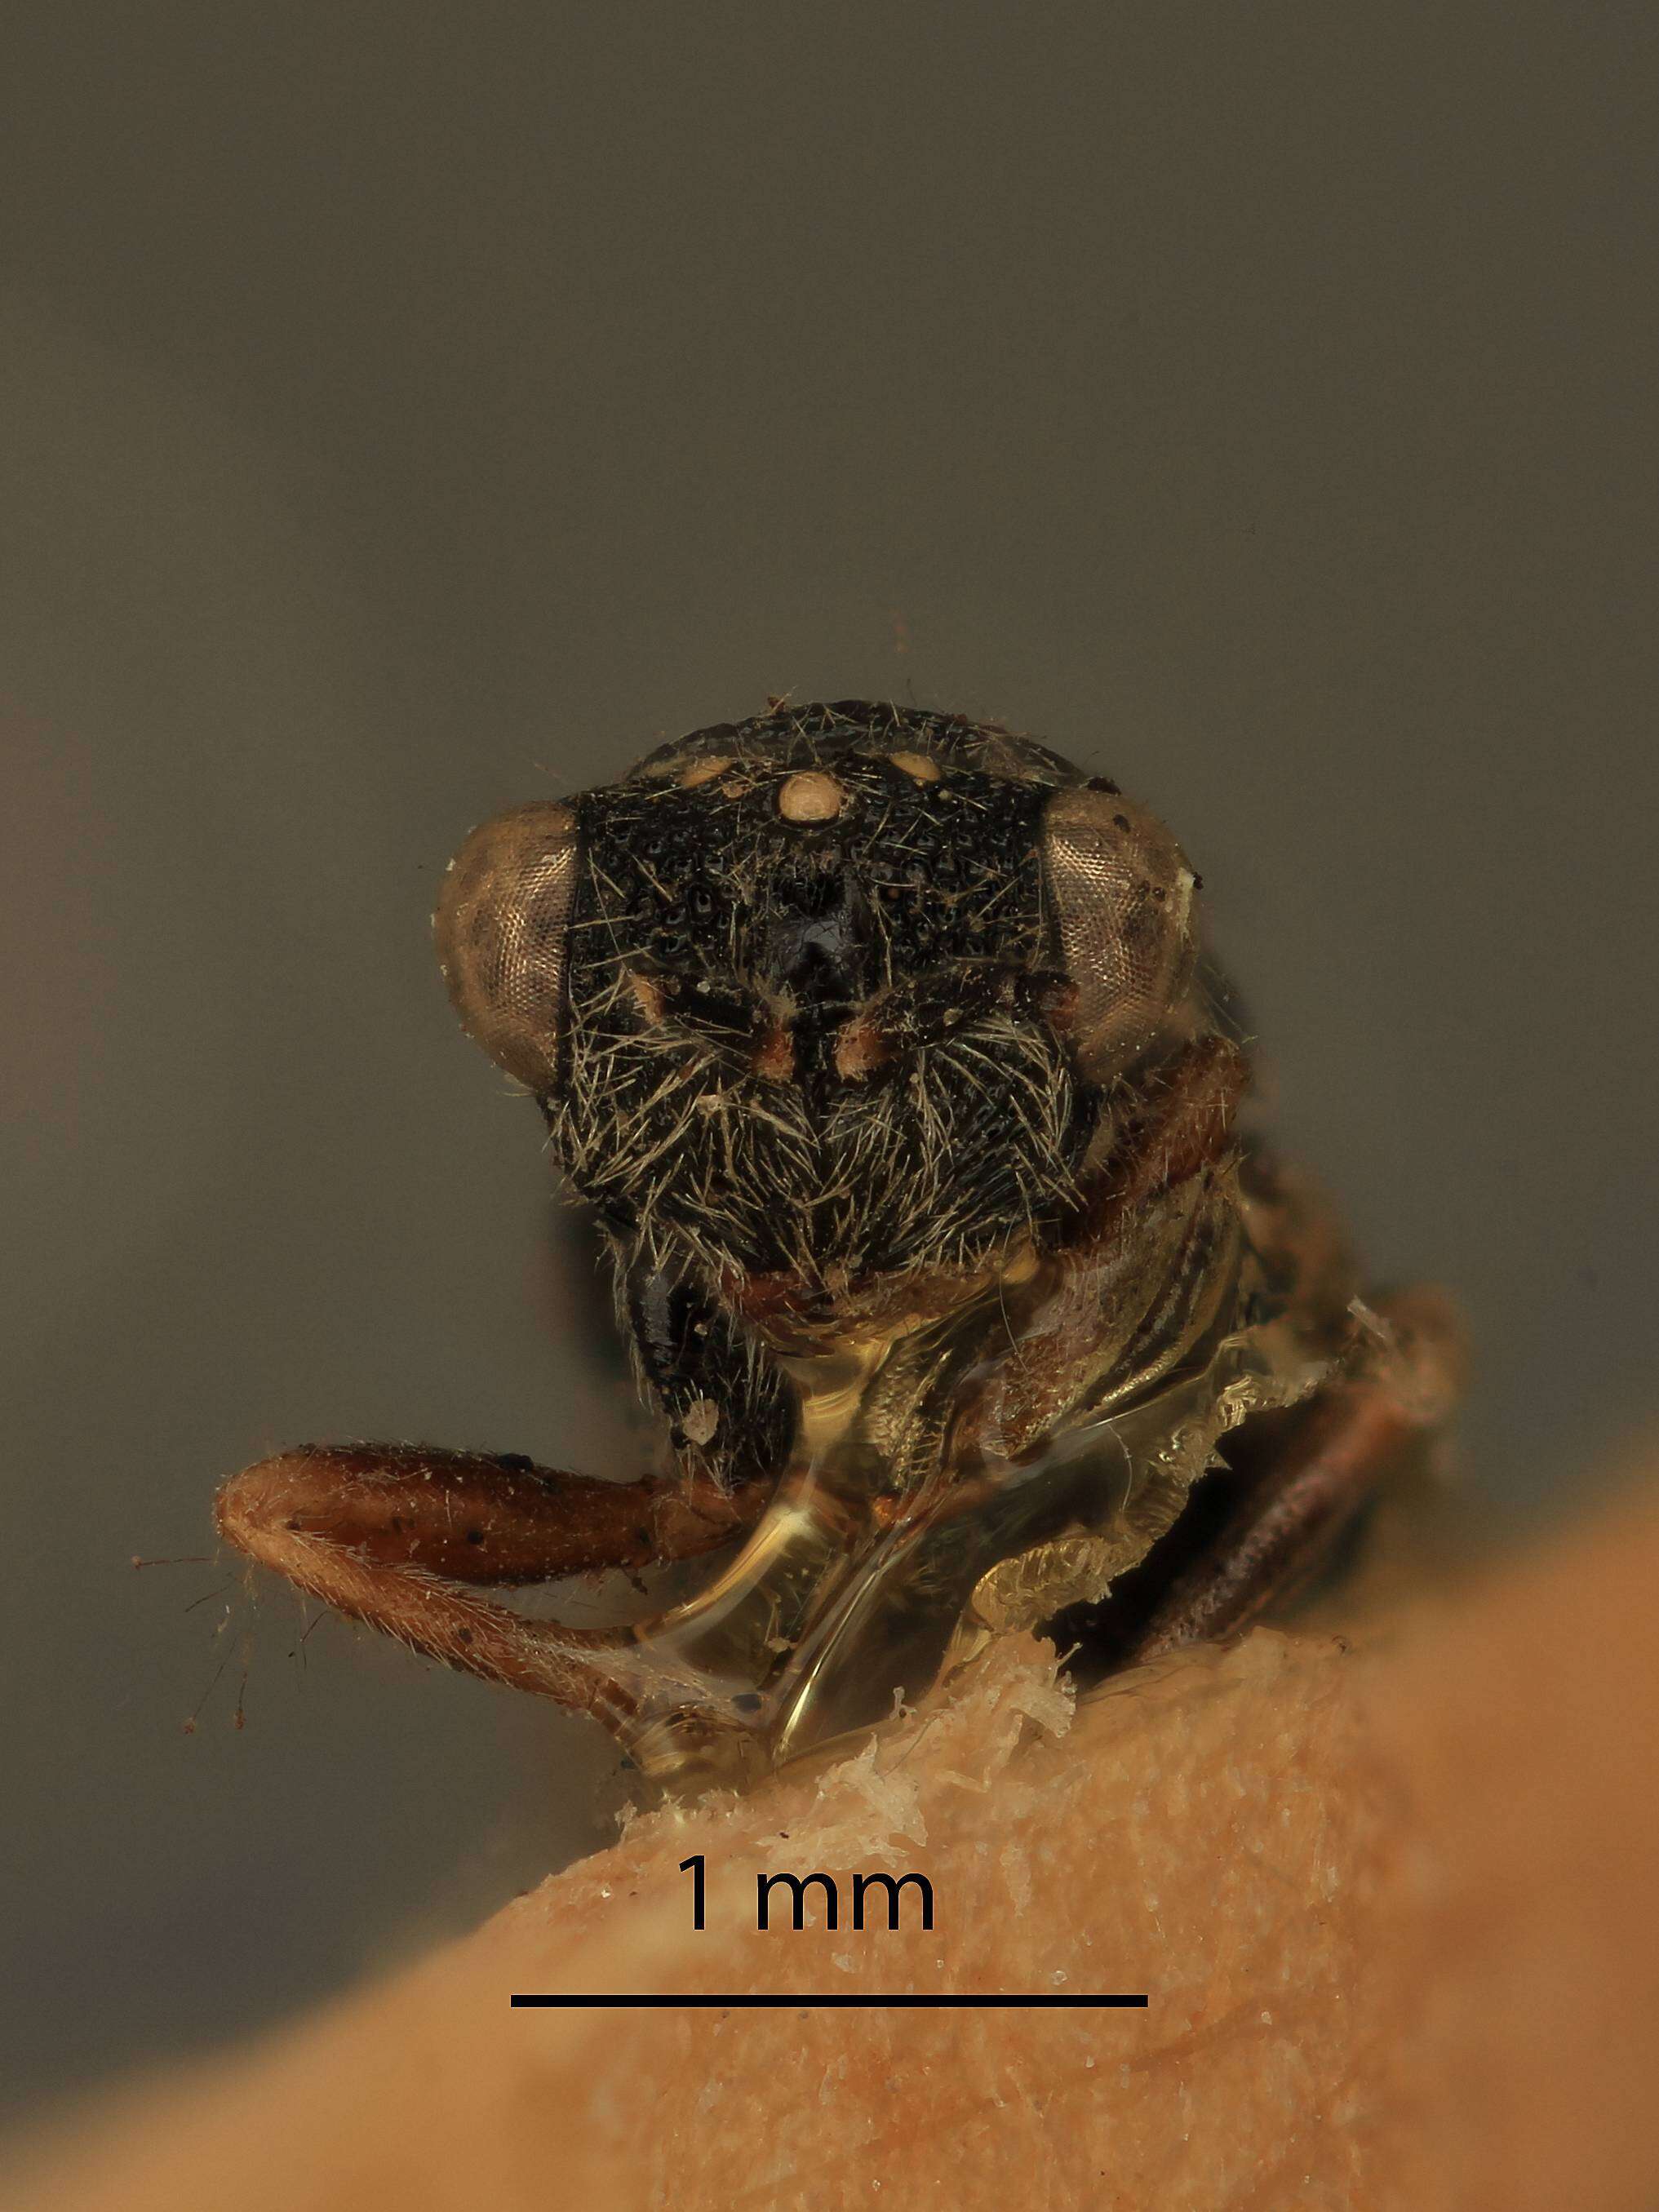 Image of Eurytoma laxitas Bugbee 1941